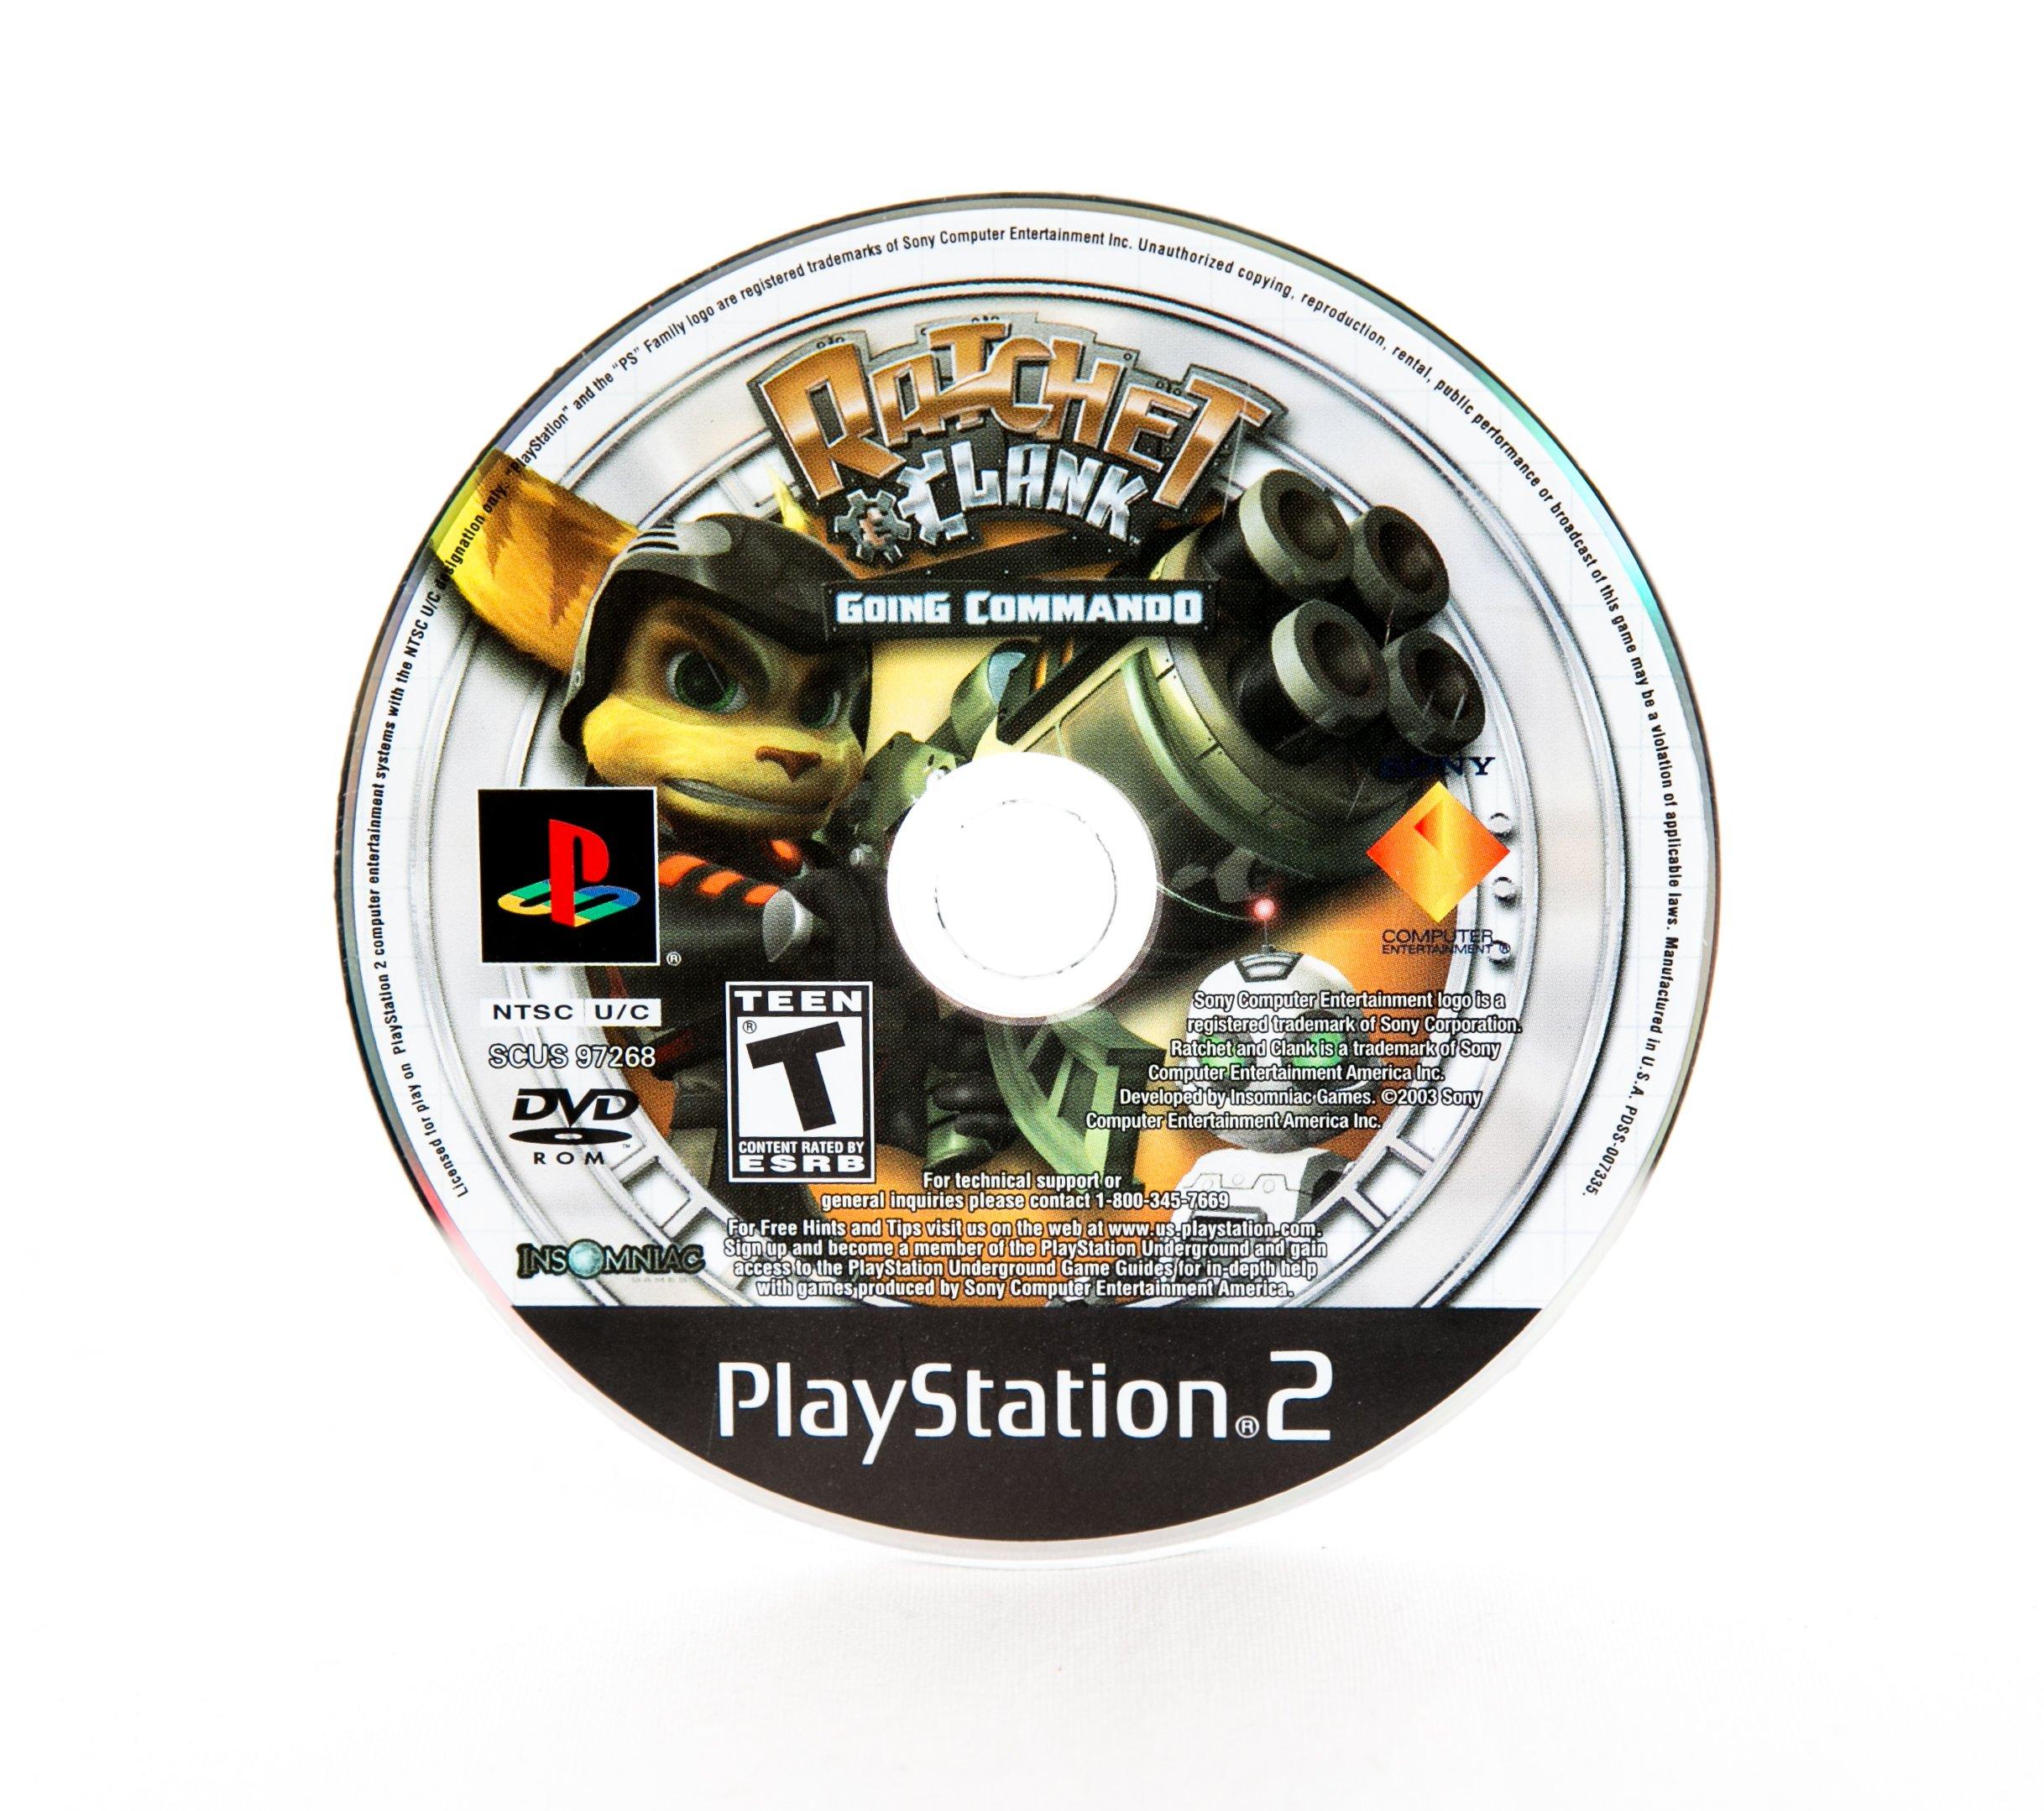 Ratchet Clank Playstation 2